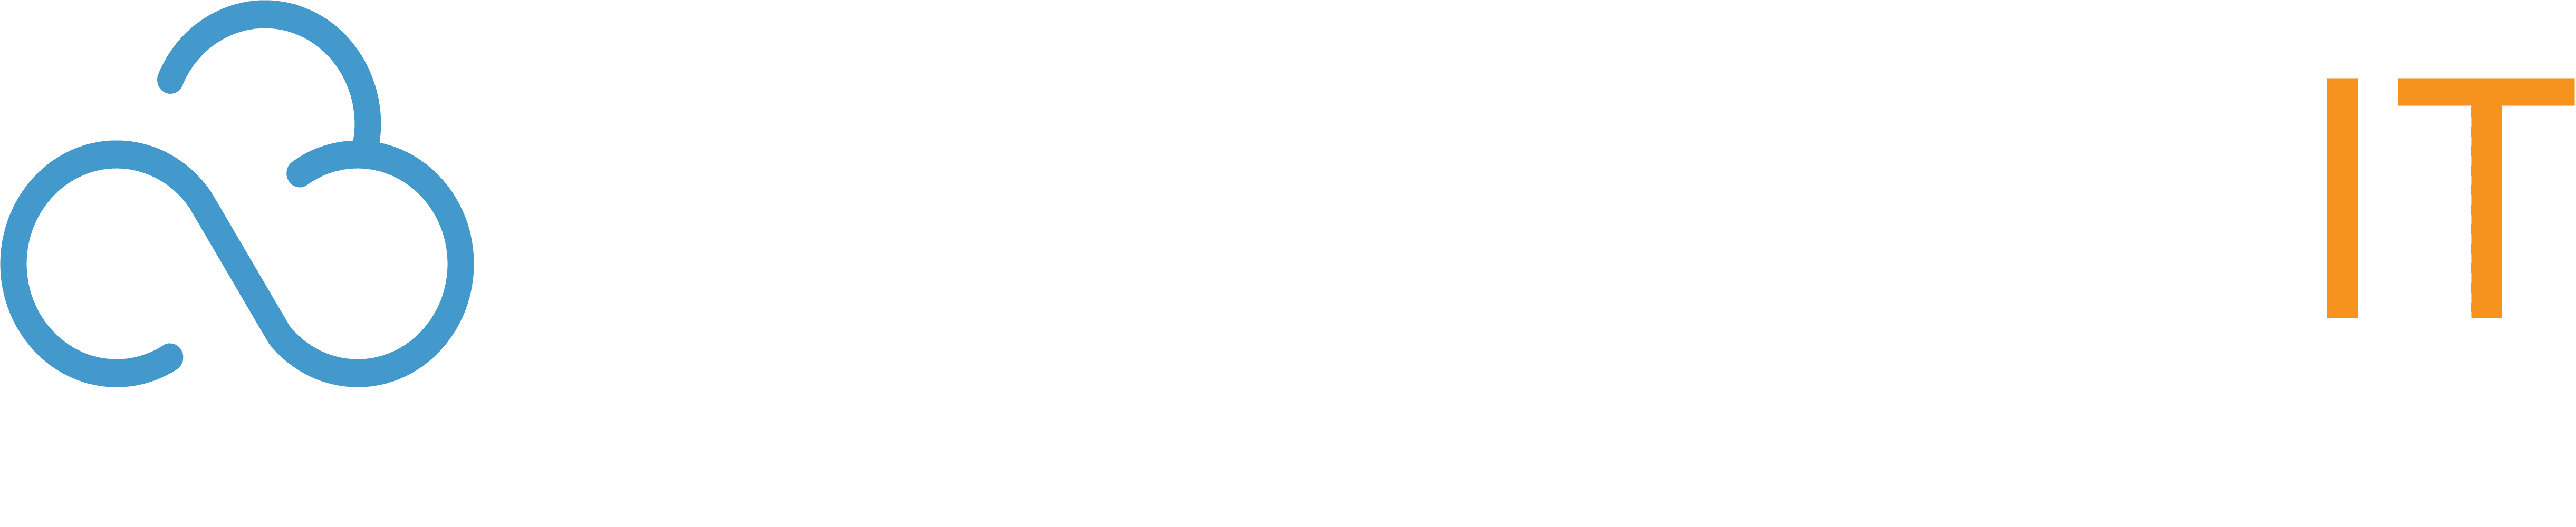 Simplistic IT Logo